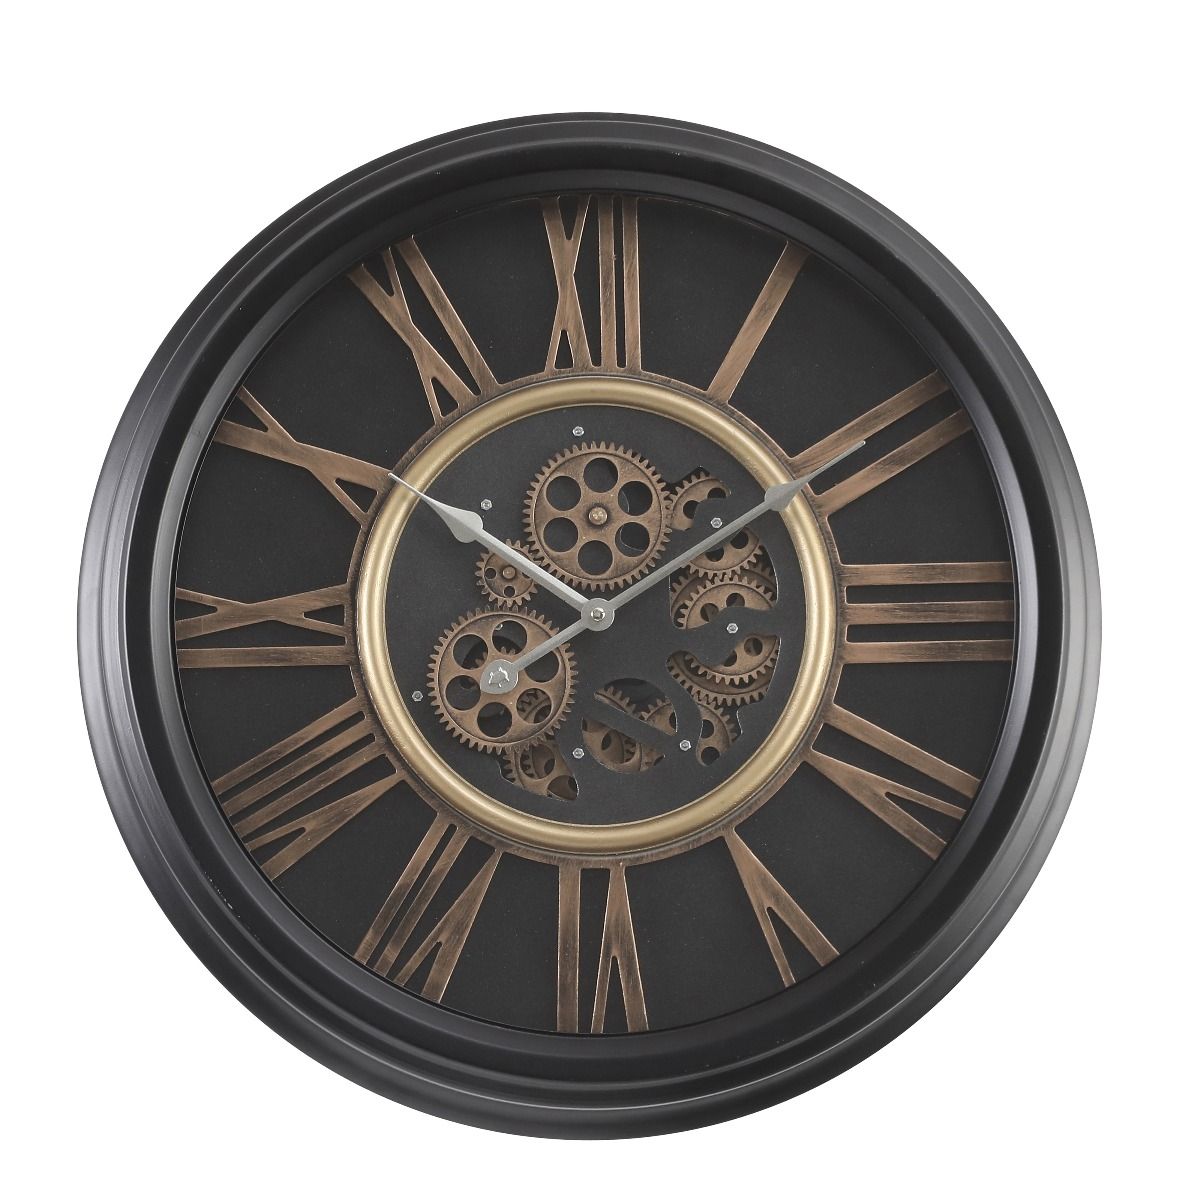 Industrial/vintage-inspired clock range - MODEL 08